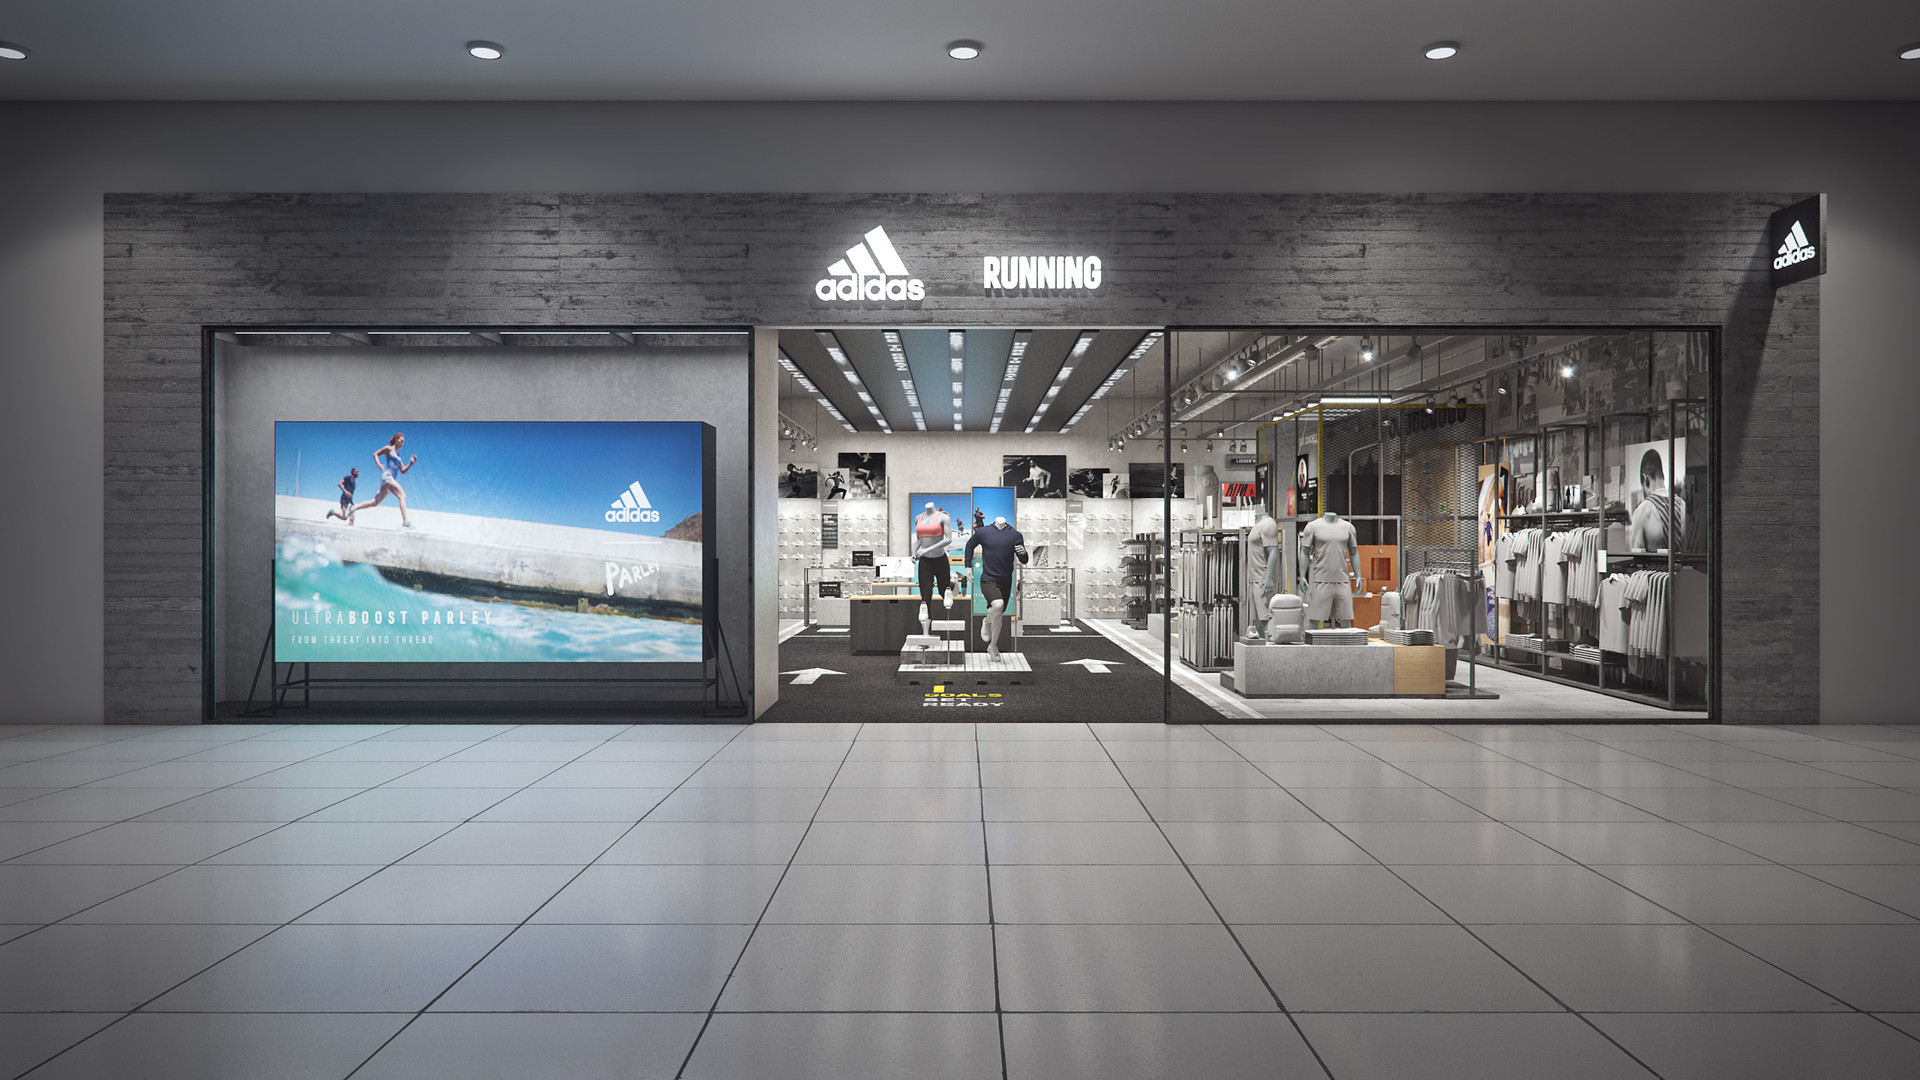 ArtStation - Adidas China Concept Stores - Running, Matthew Wolf